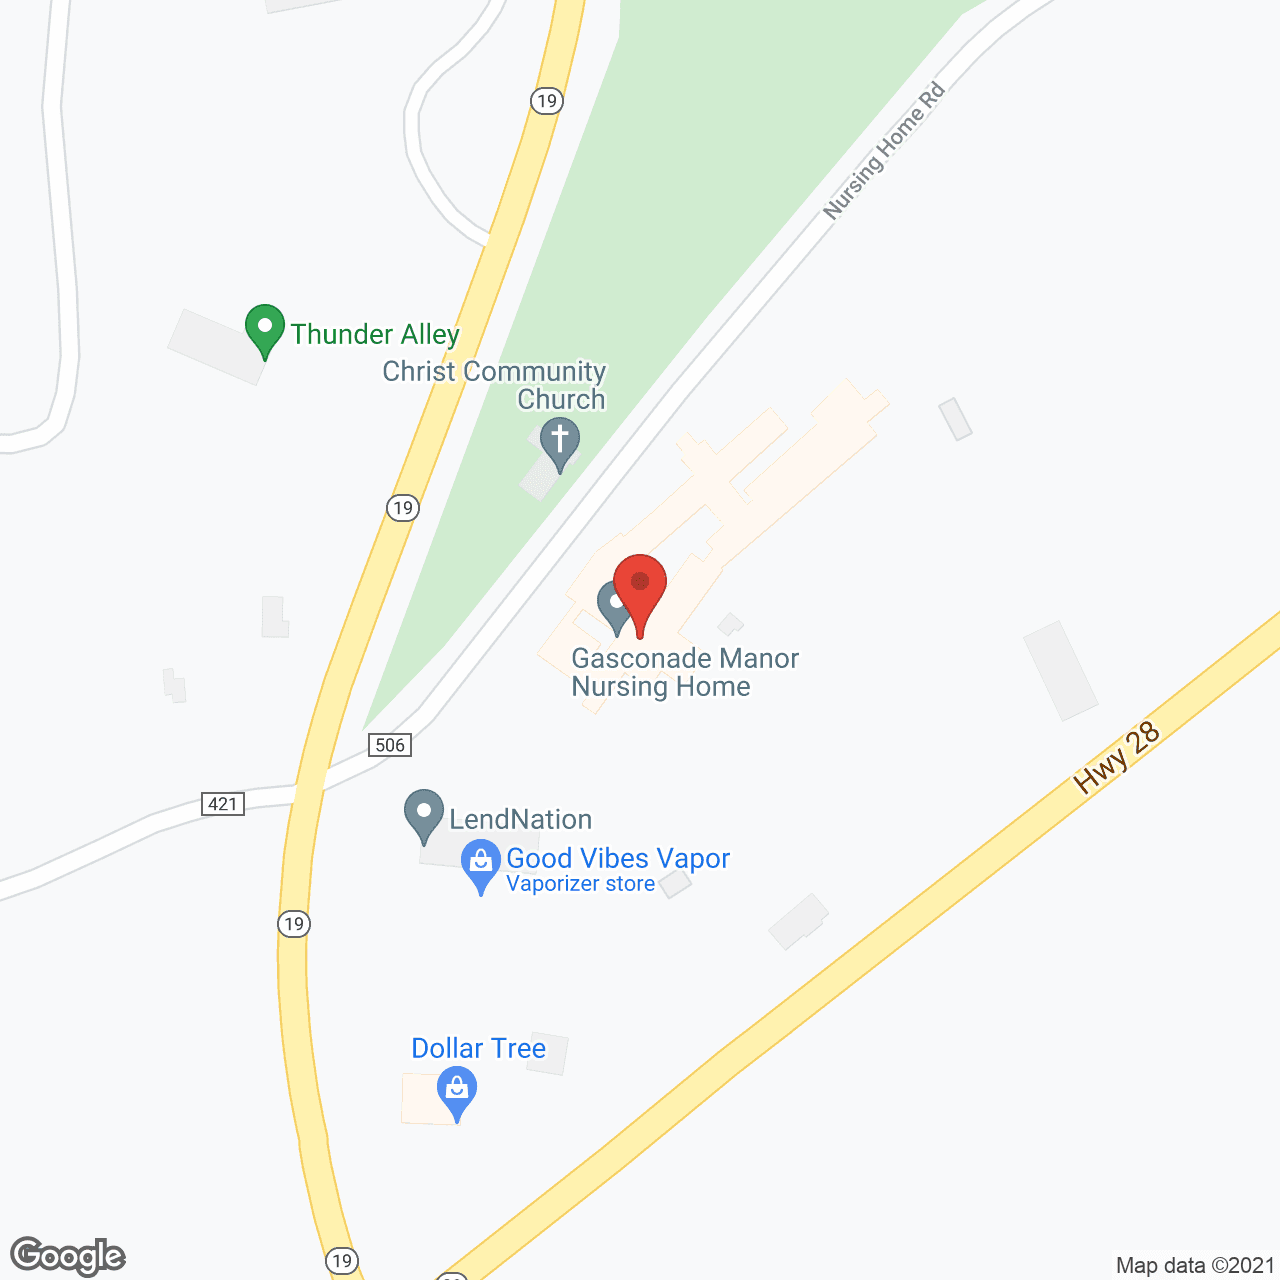 Gasconade Manor Nursing Home in google map